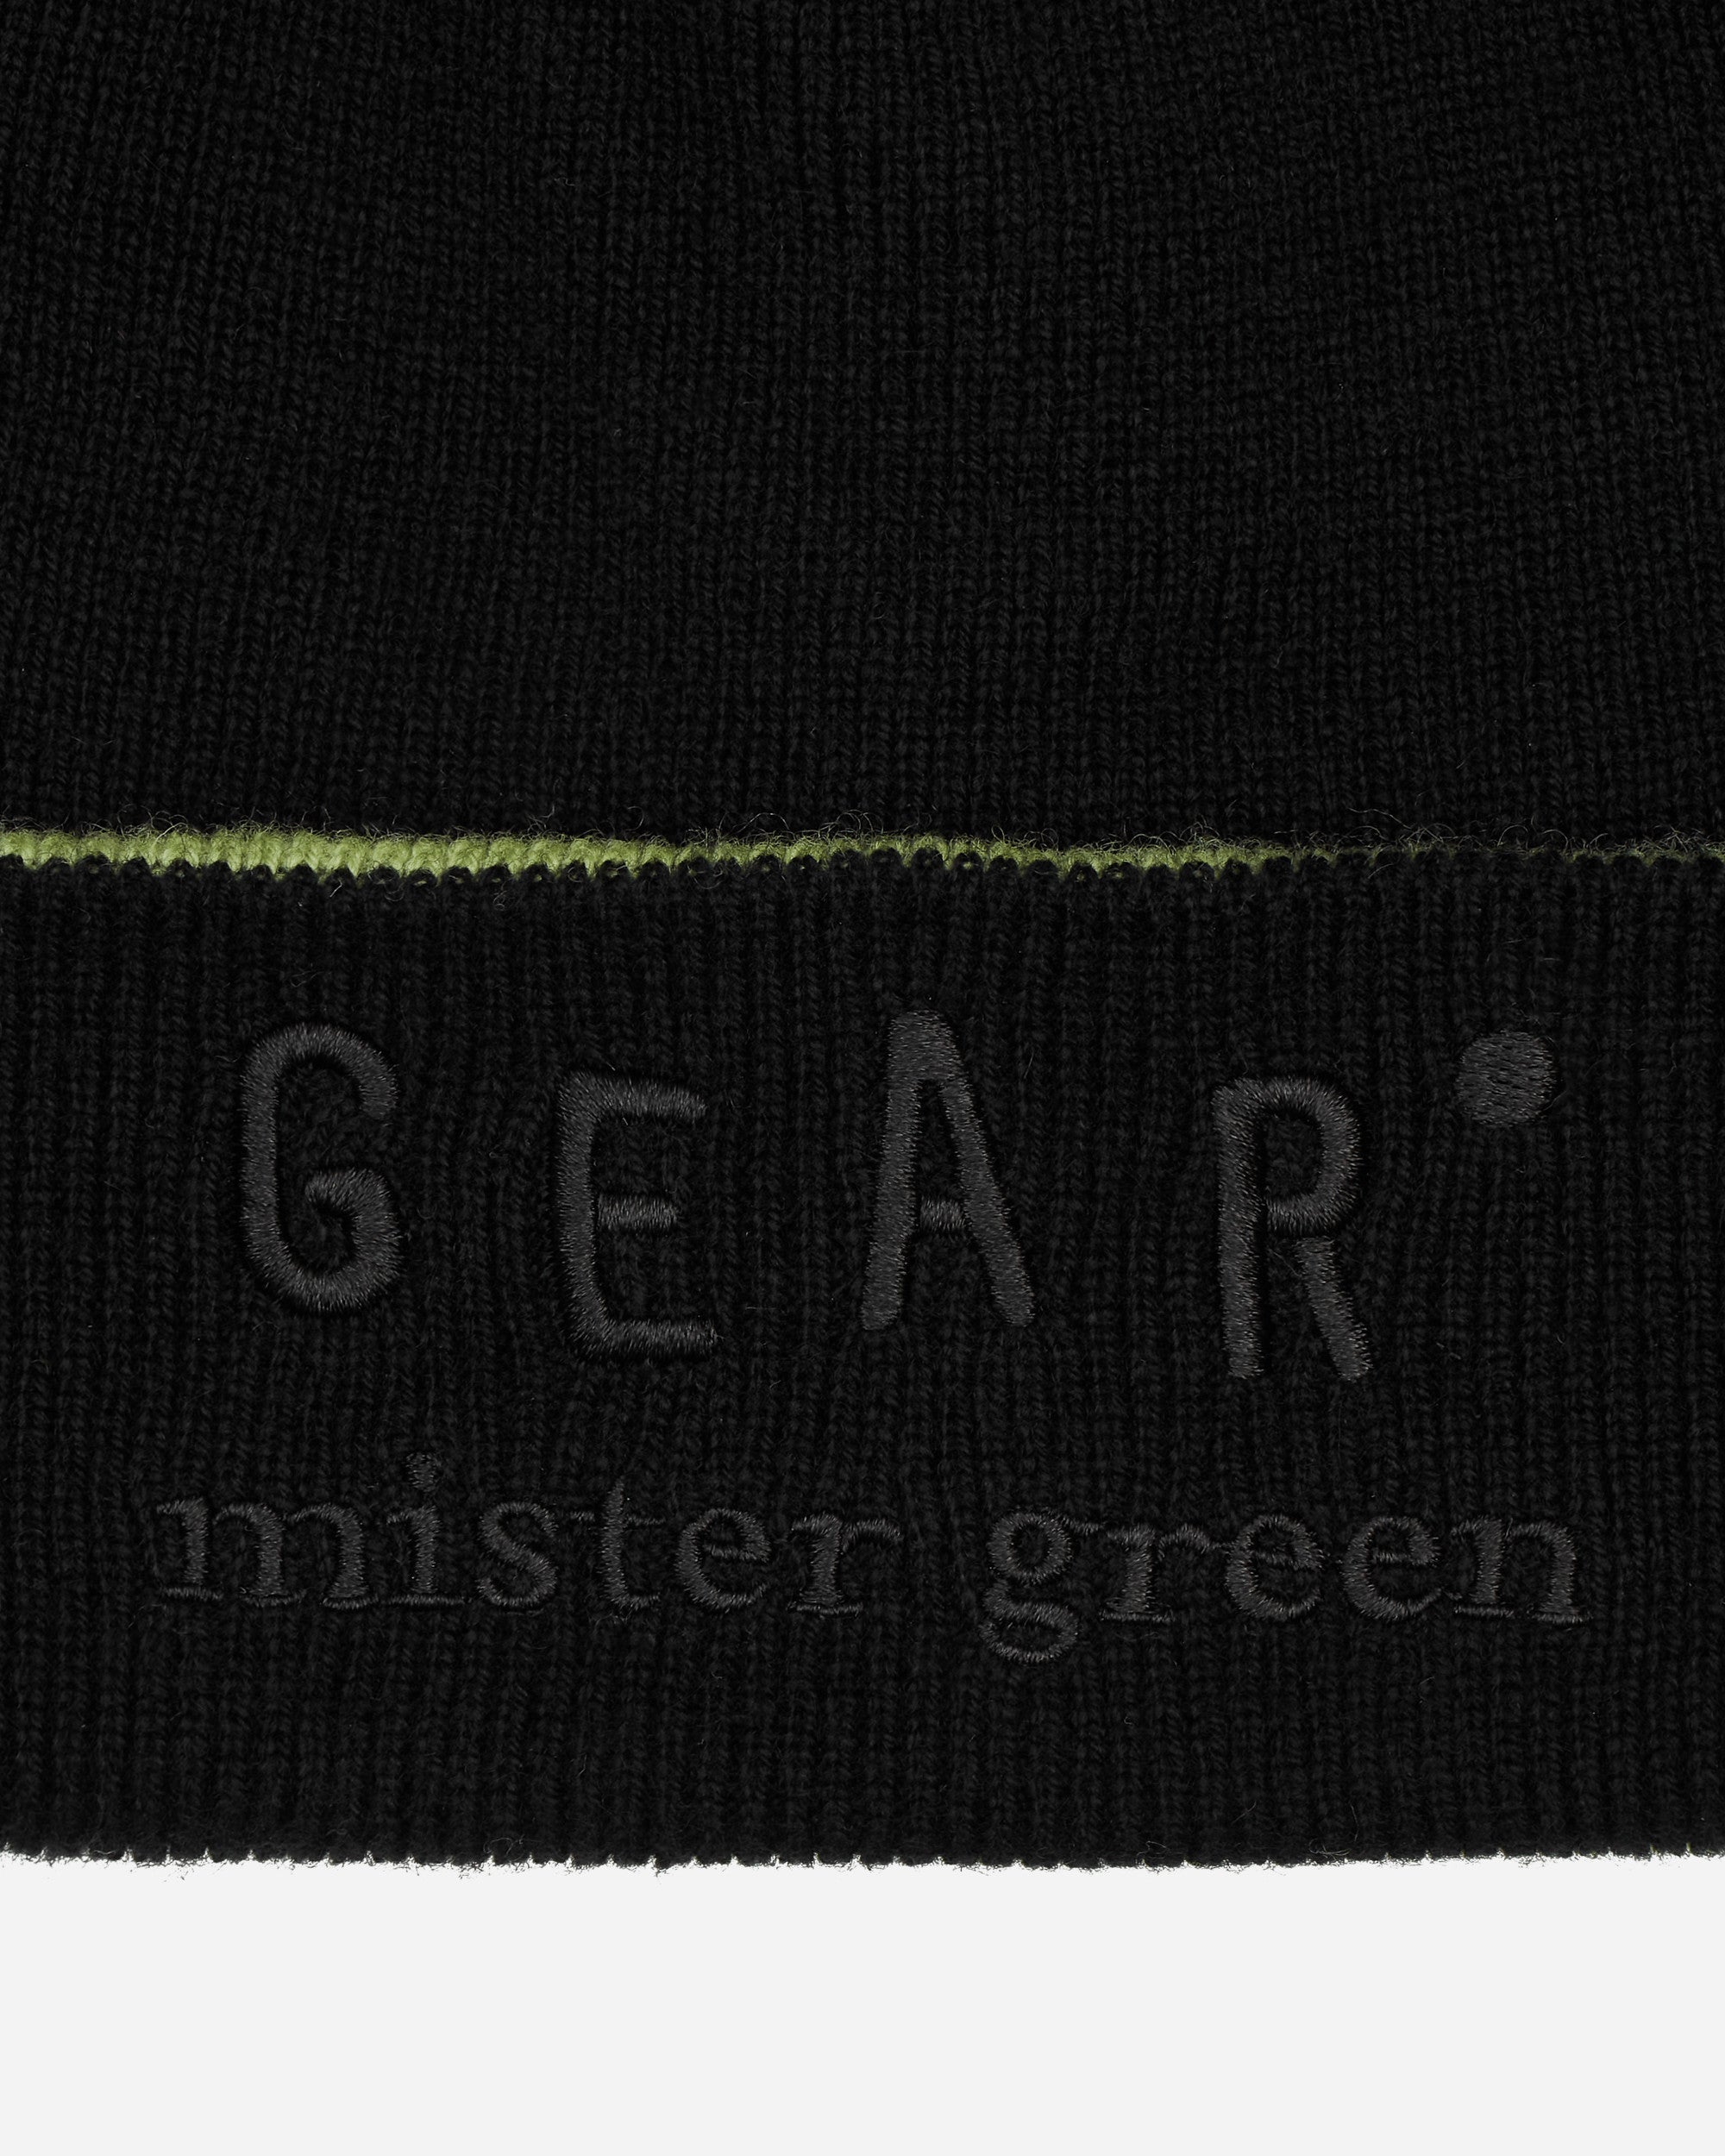 Mister Green Cashmere Gear Black/Olive Hats Beanies MGCASHMERECAP 001